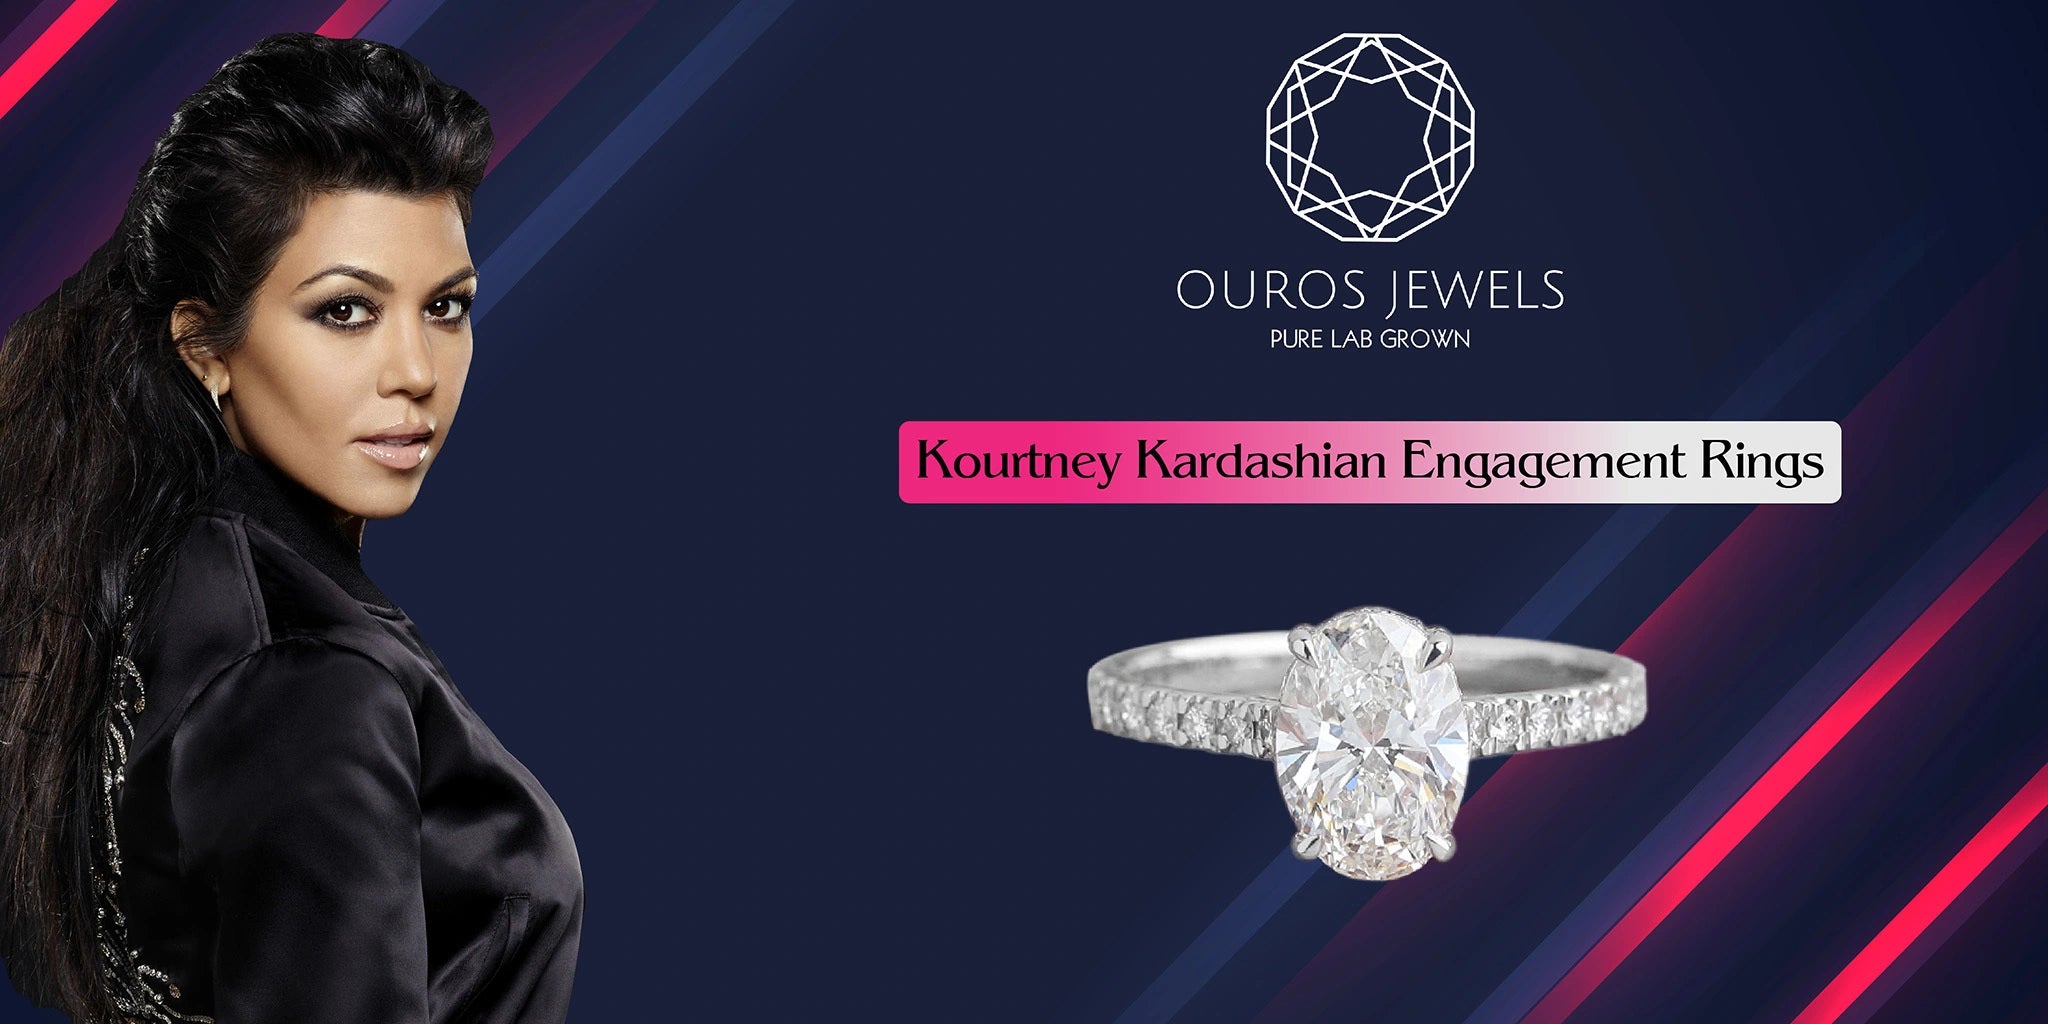 Kourtney Kardashian Engagement and Wedding Ring Price and Details